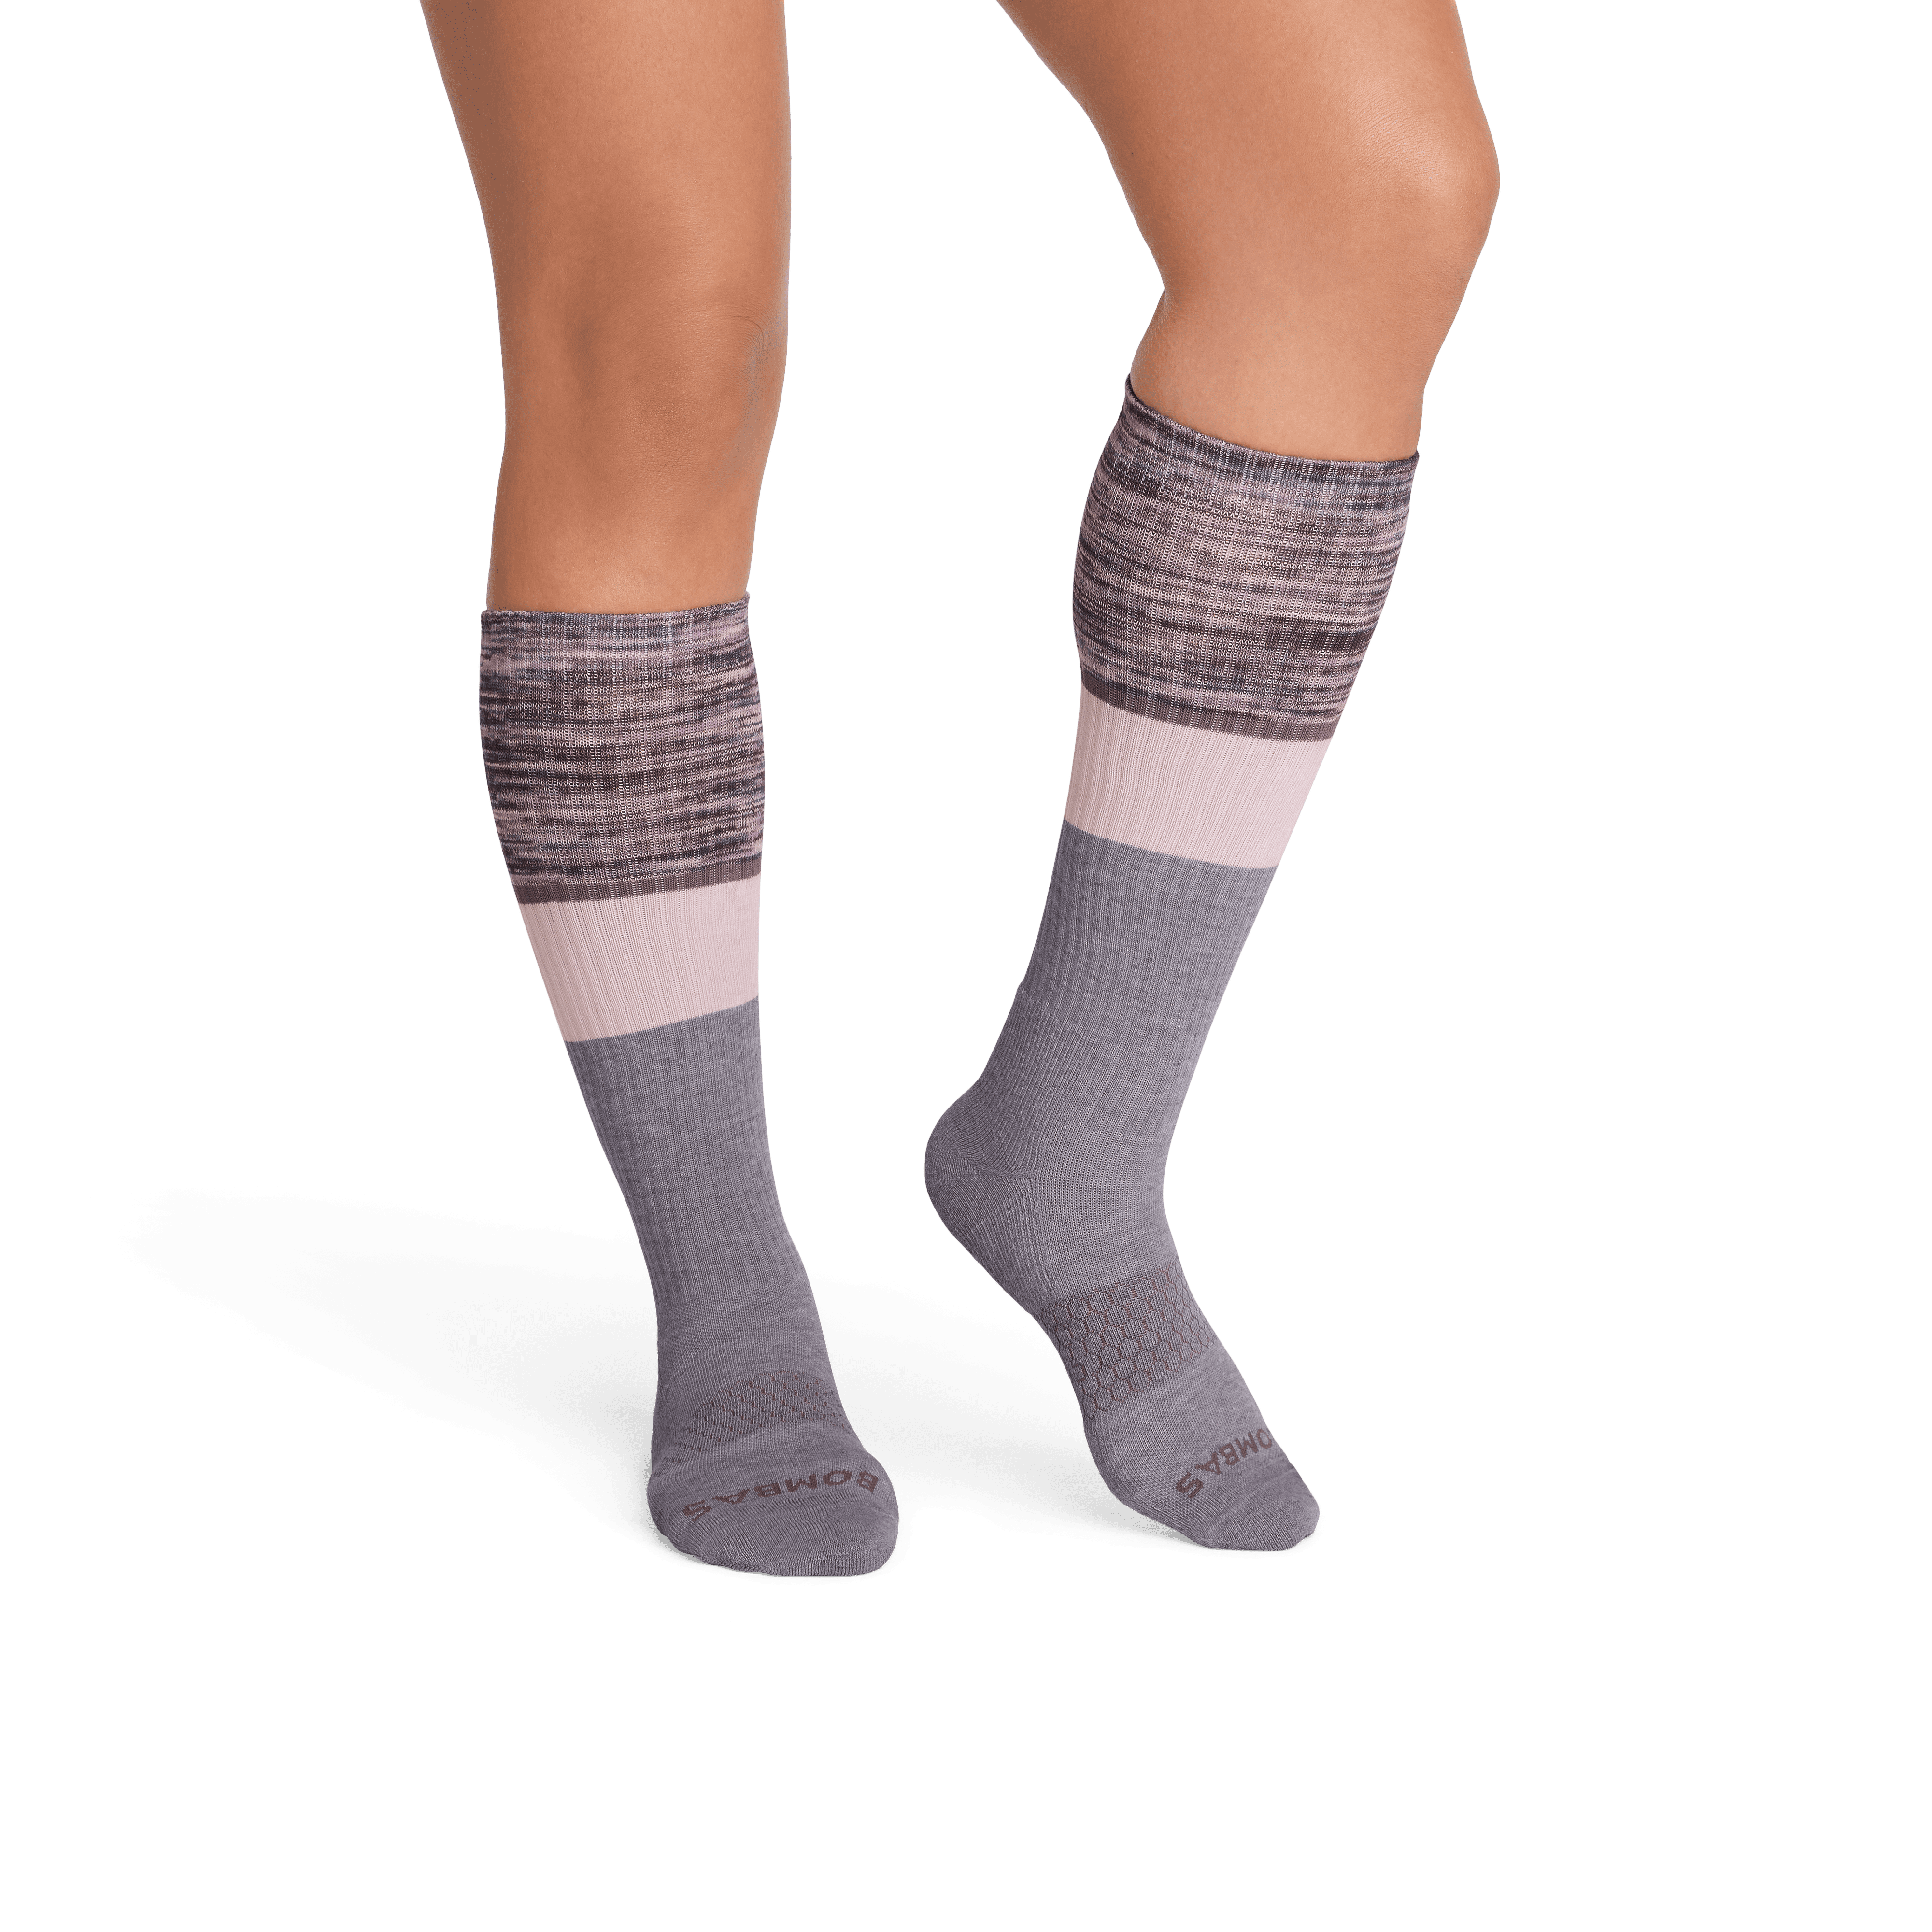 Thigh High Compression Stockings Support 15 20 MmHg Gradient Socks Men  Women Treatment Swelling,Varicose Veins,Edema, Pregnancy From  Clothwelldone, $41.88